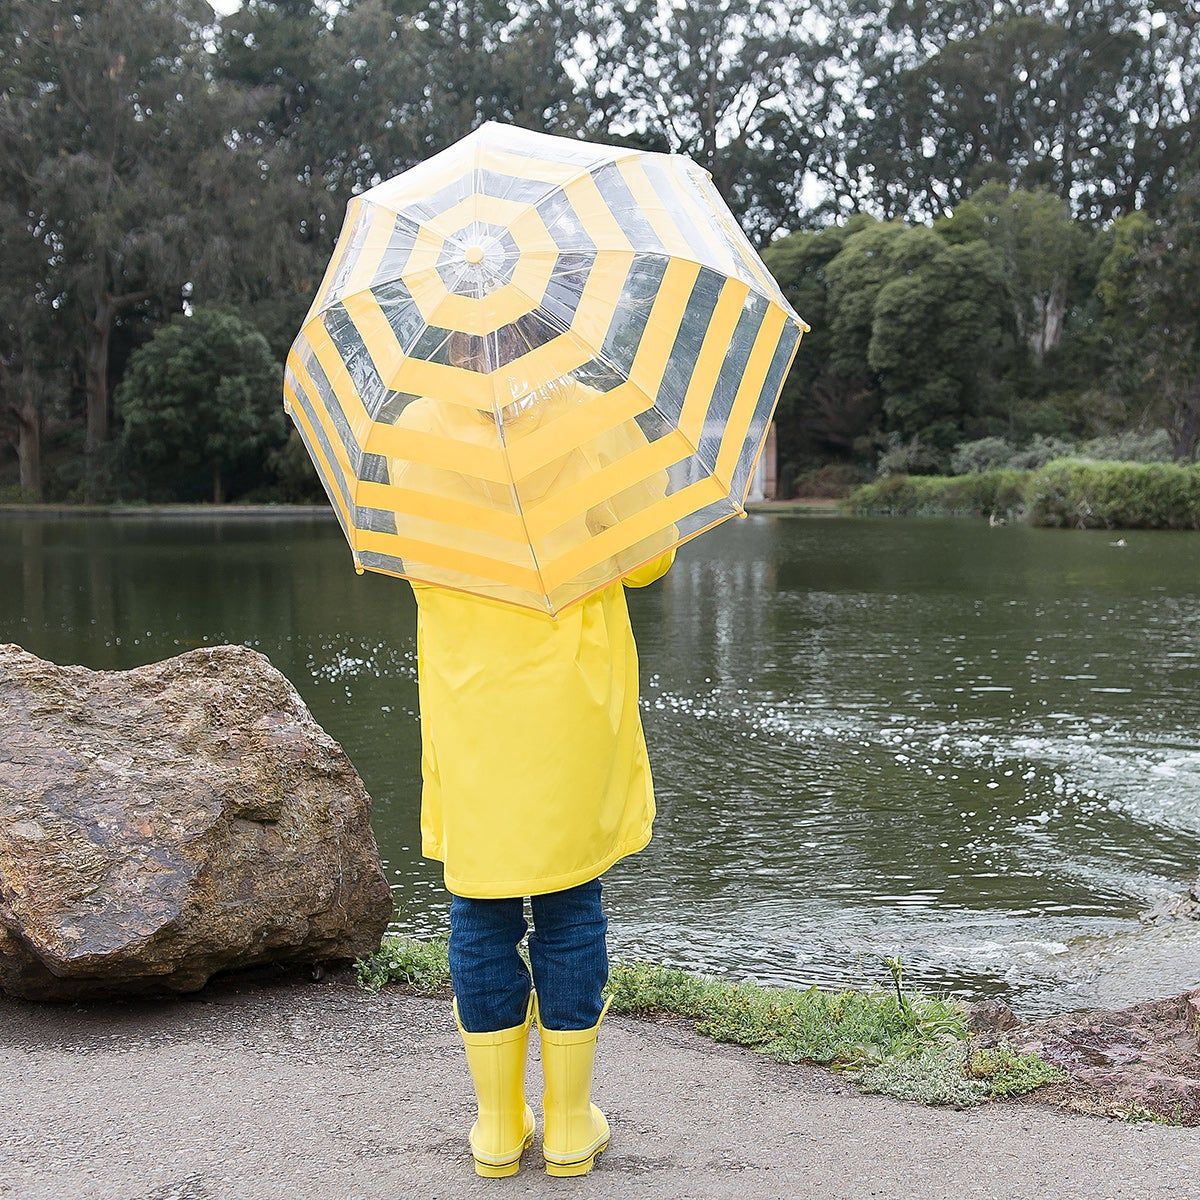 Kid in rain gear with an umbrella